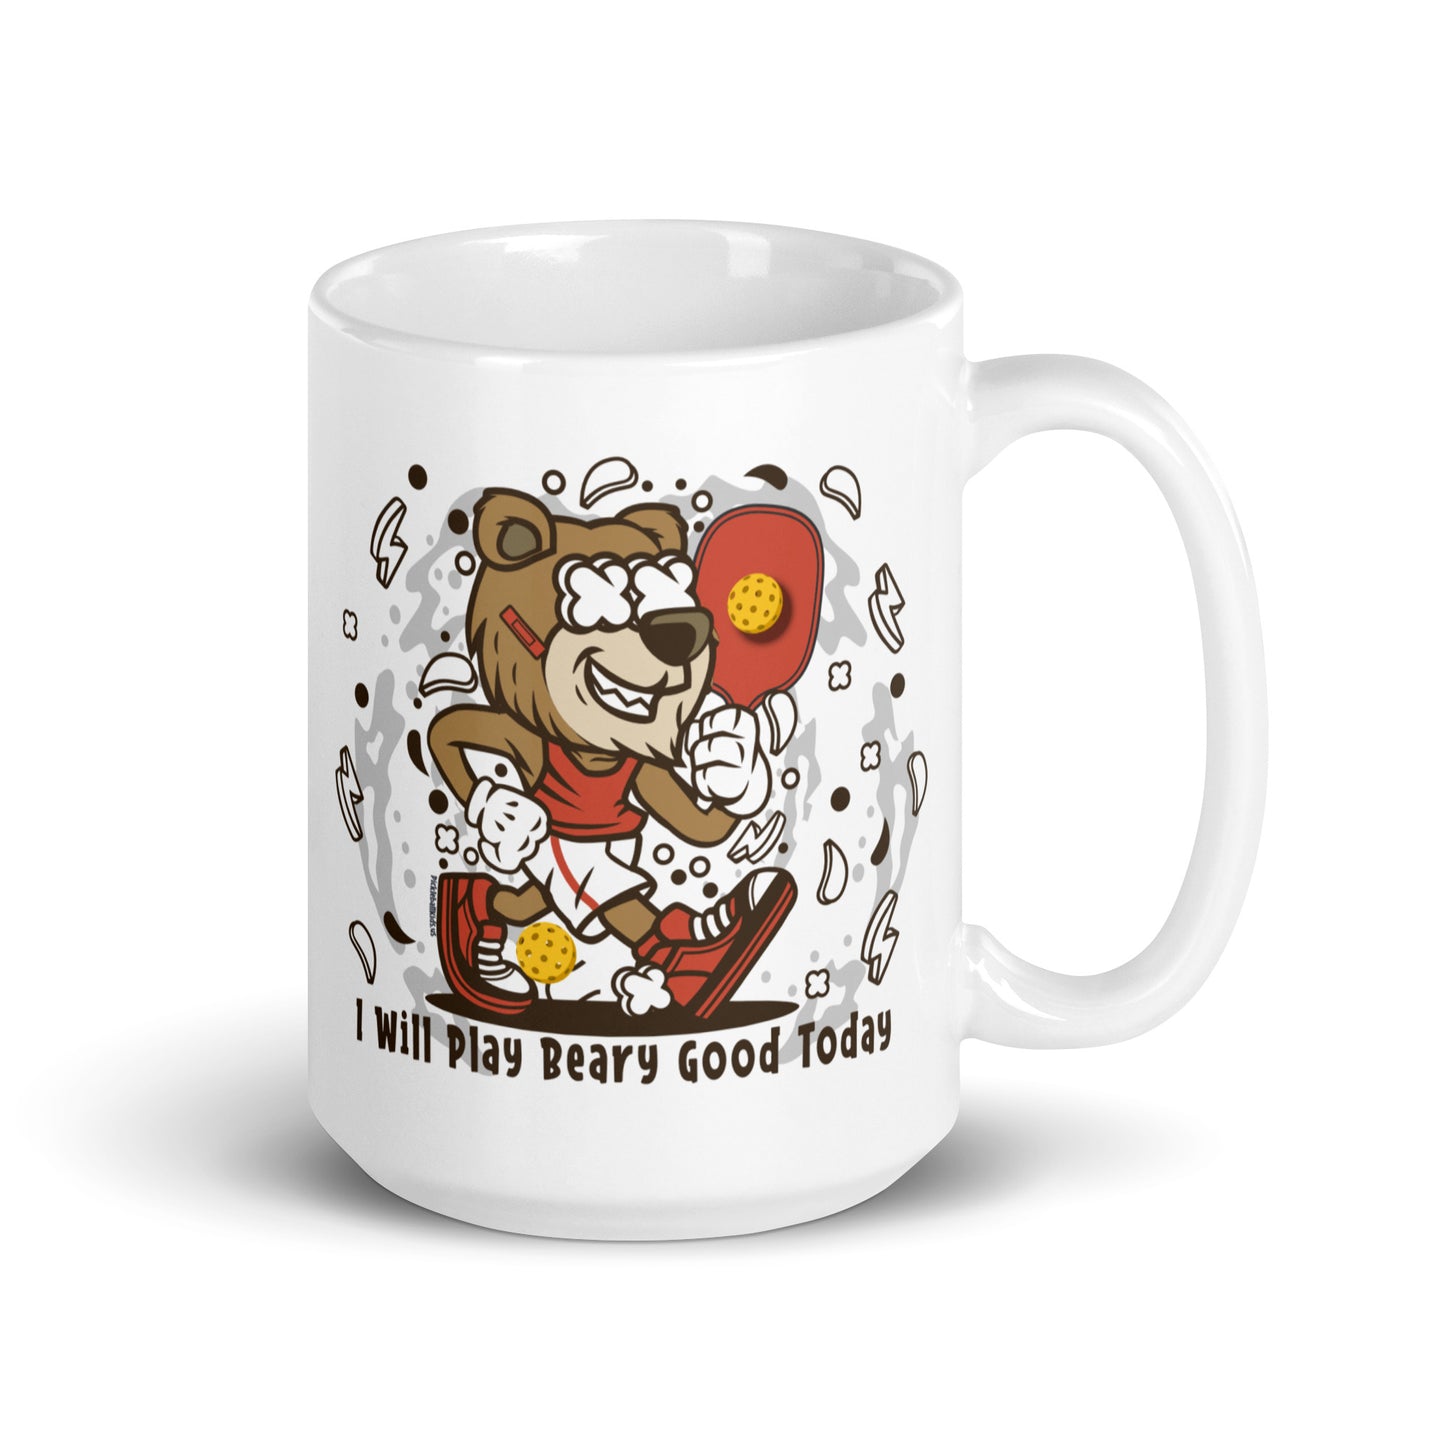 Fun Puns on Pickleball Coffee White Glossy Mug, "I' Will Play Beary Good Today"